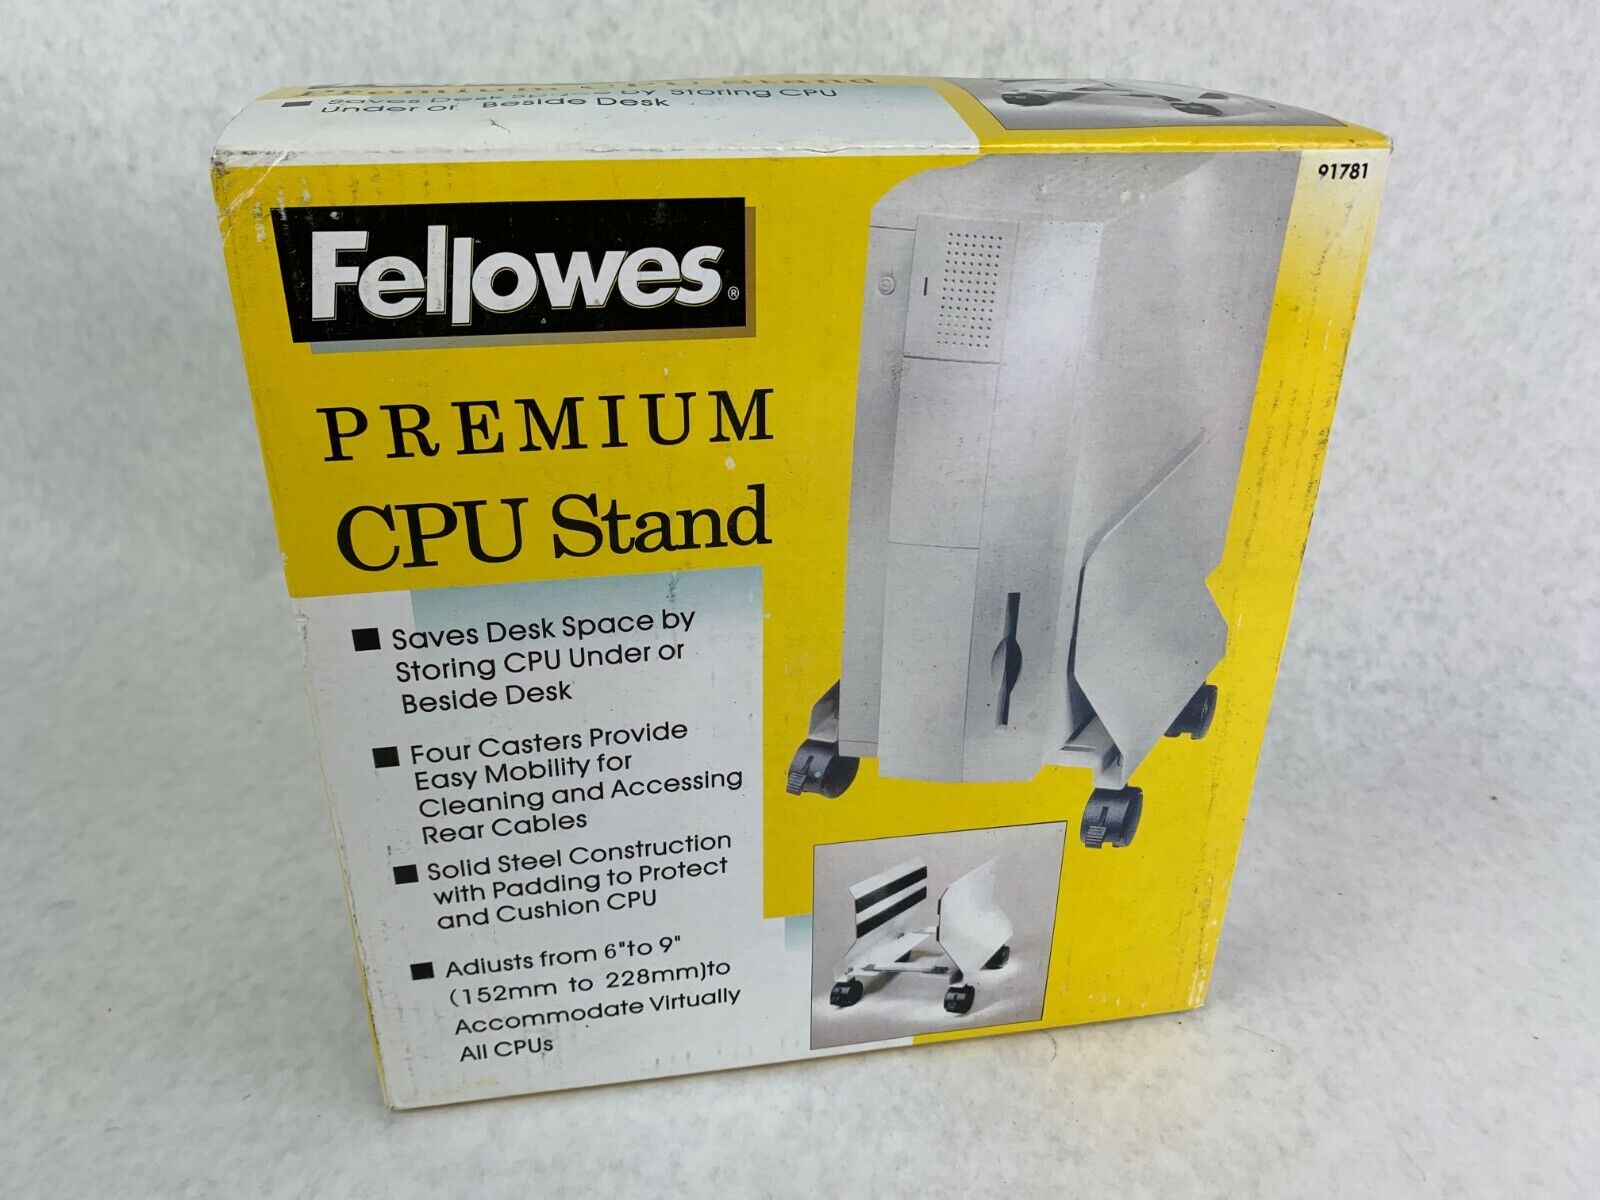 Fellowes Premium Steel Desktop Computer CPU Stand  6"- 9" with Wheels